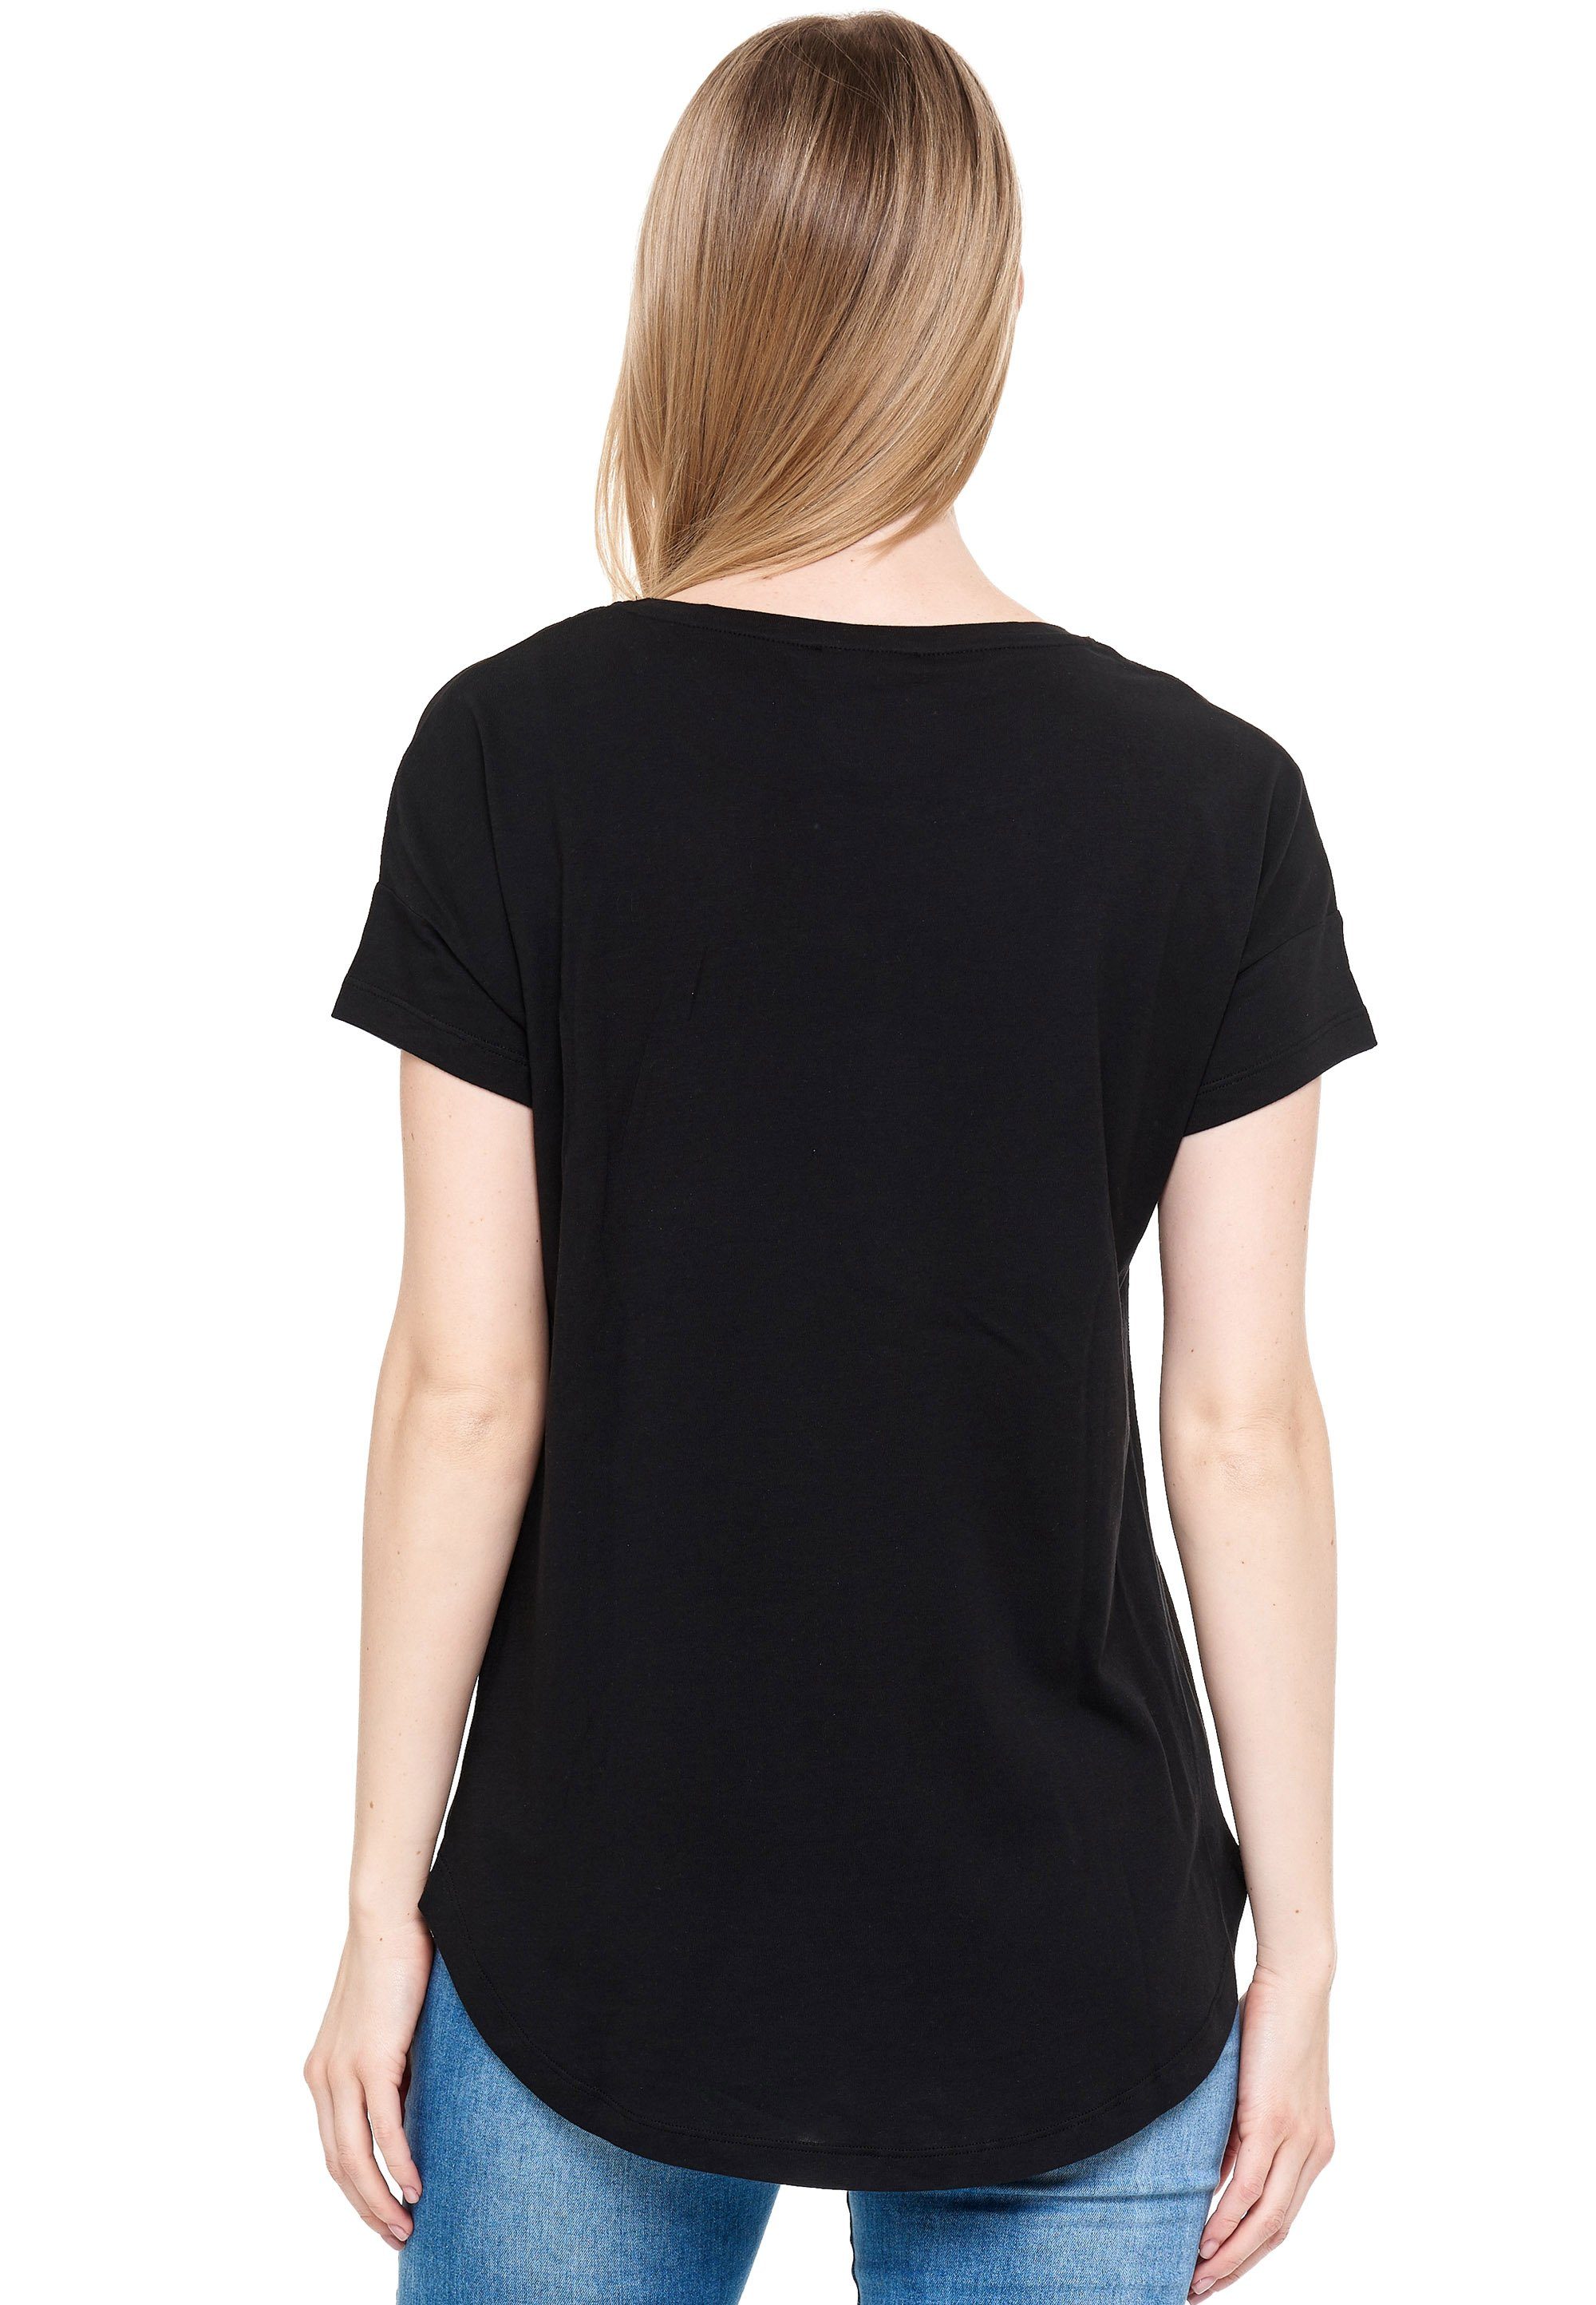 Decay T-Shirt mit stilbewusstem Frontprint schwarz